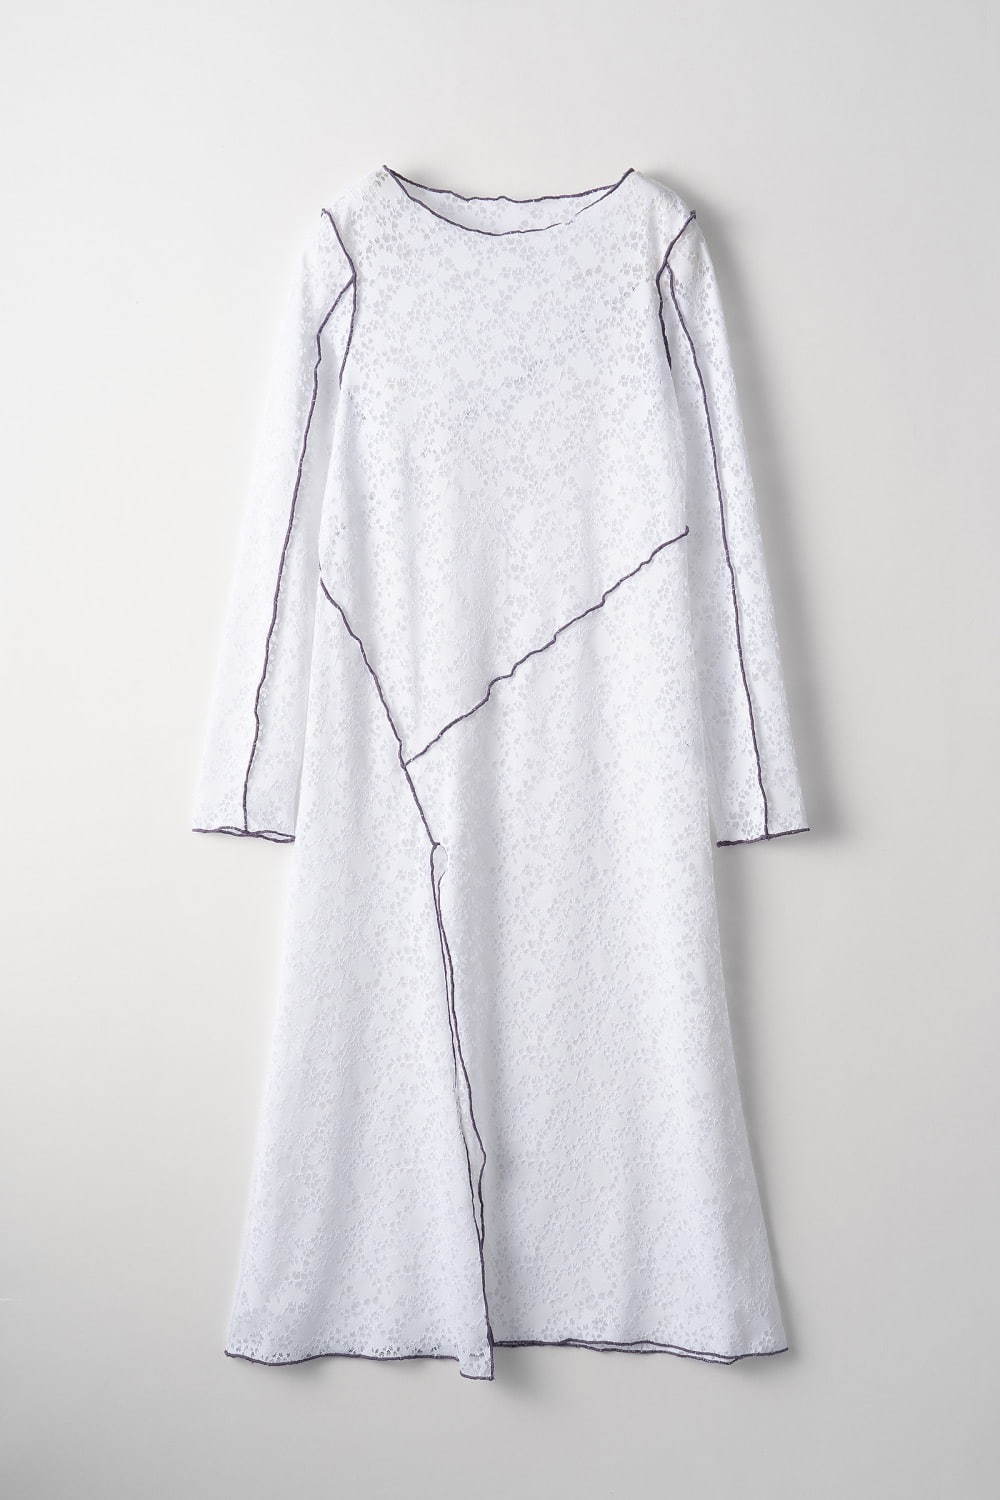 long stretch lace dress 29,700円(税込)